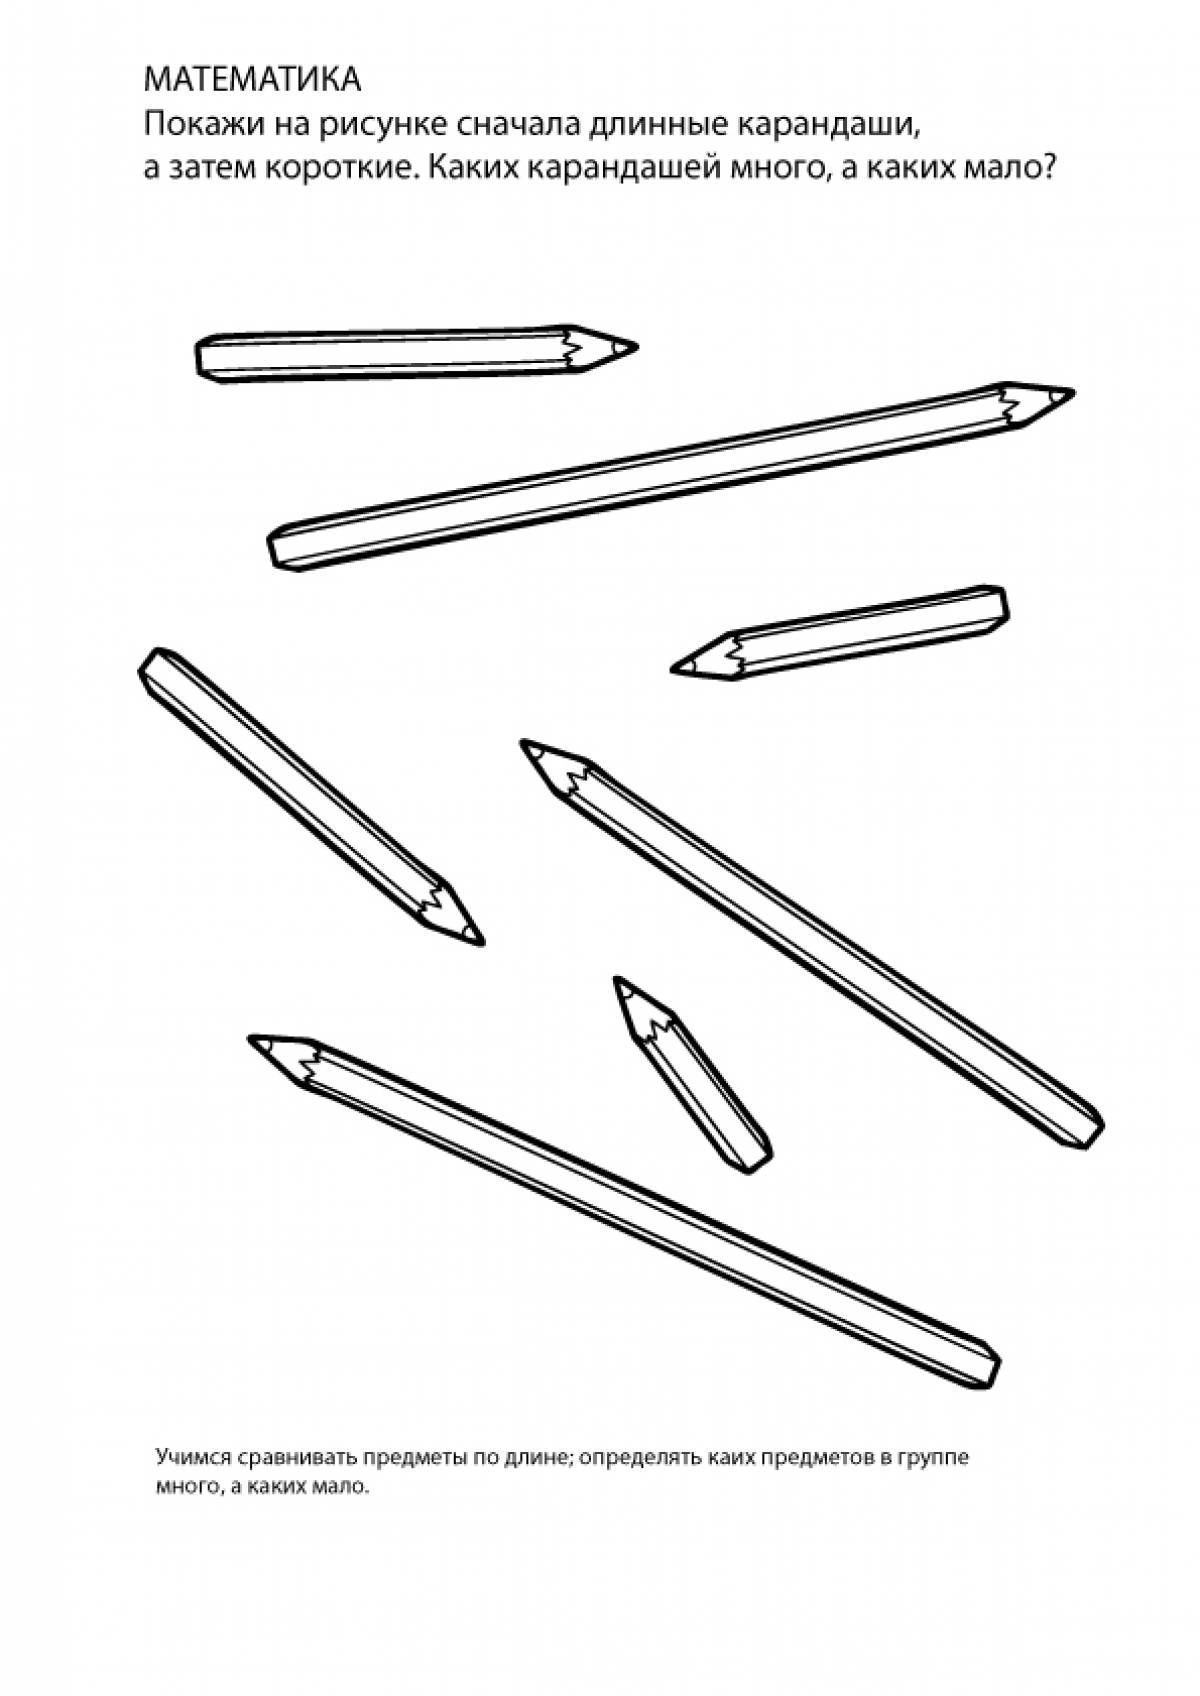 Short and long pencils